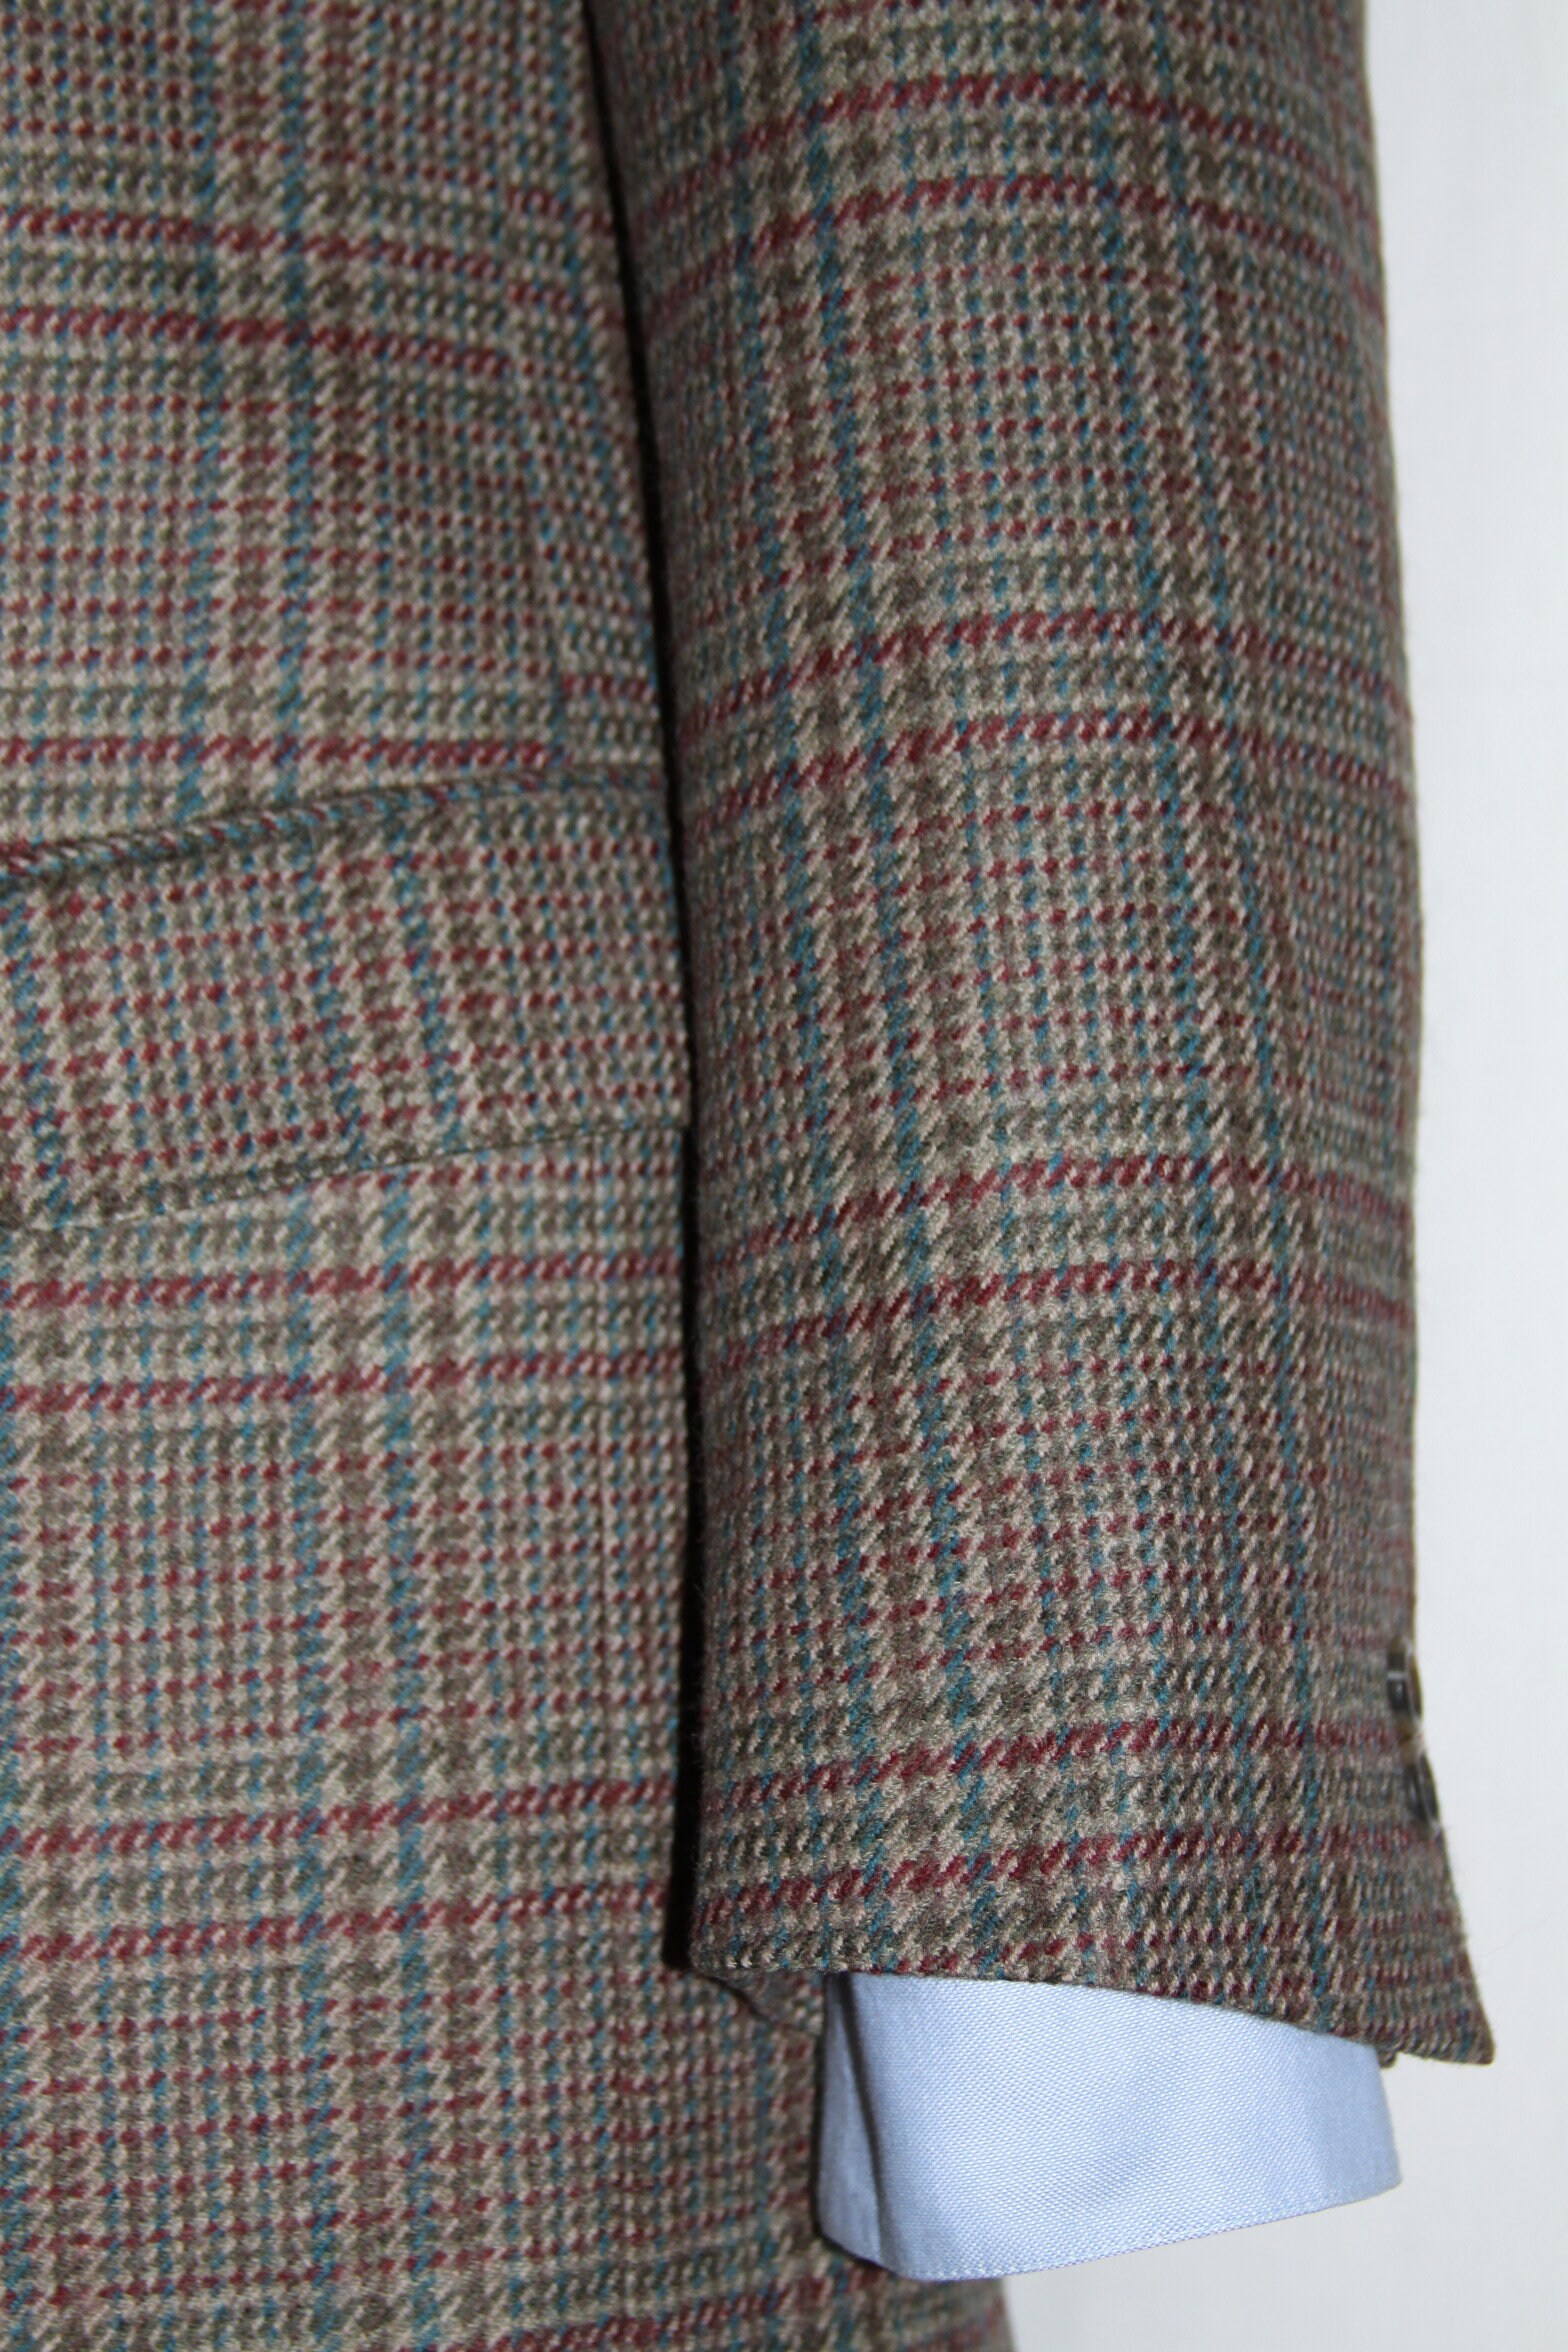 Zethadeem Exquisit Genuine Vintage Tweed Houndstooth Checked - Etsy